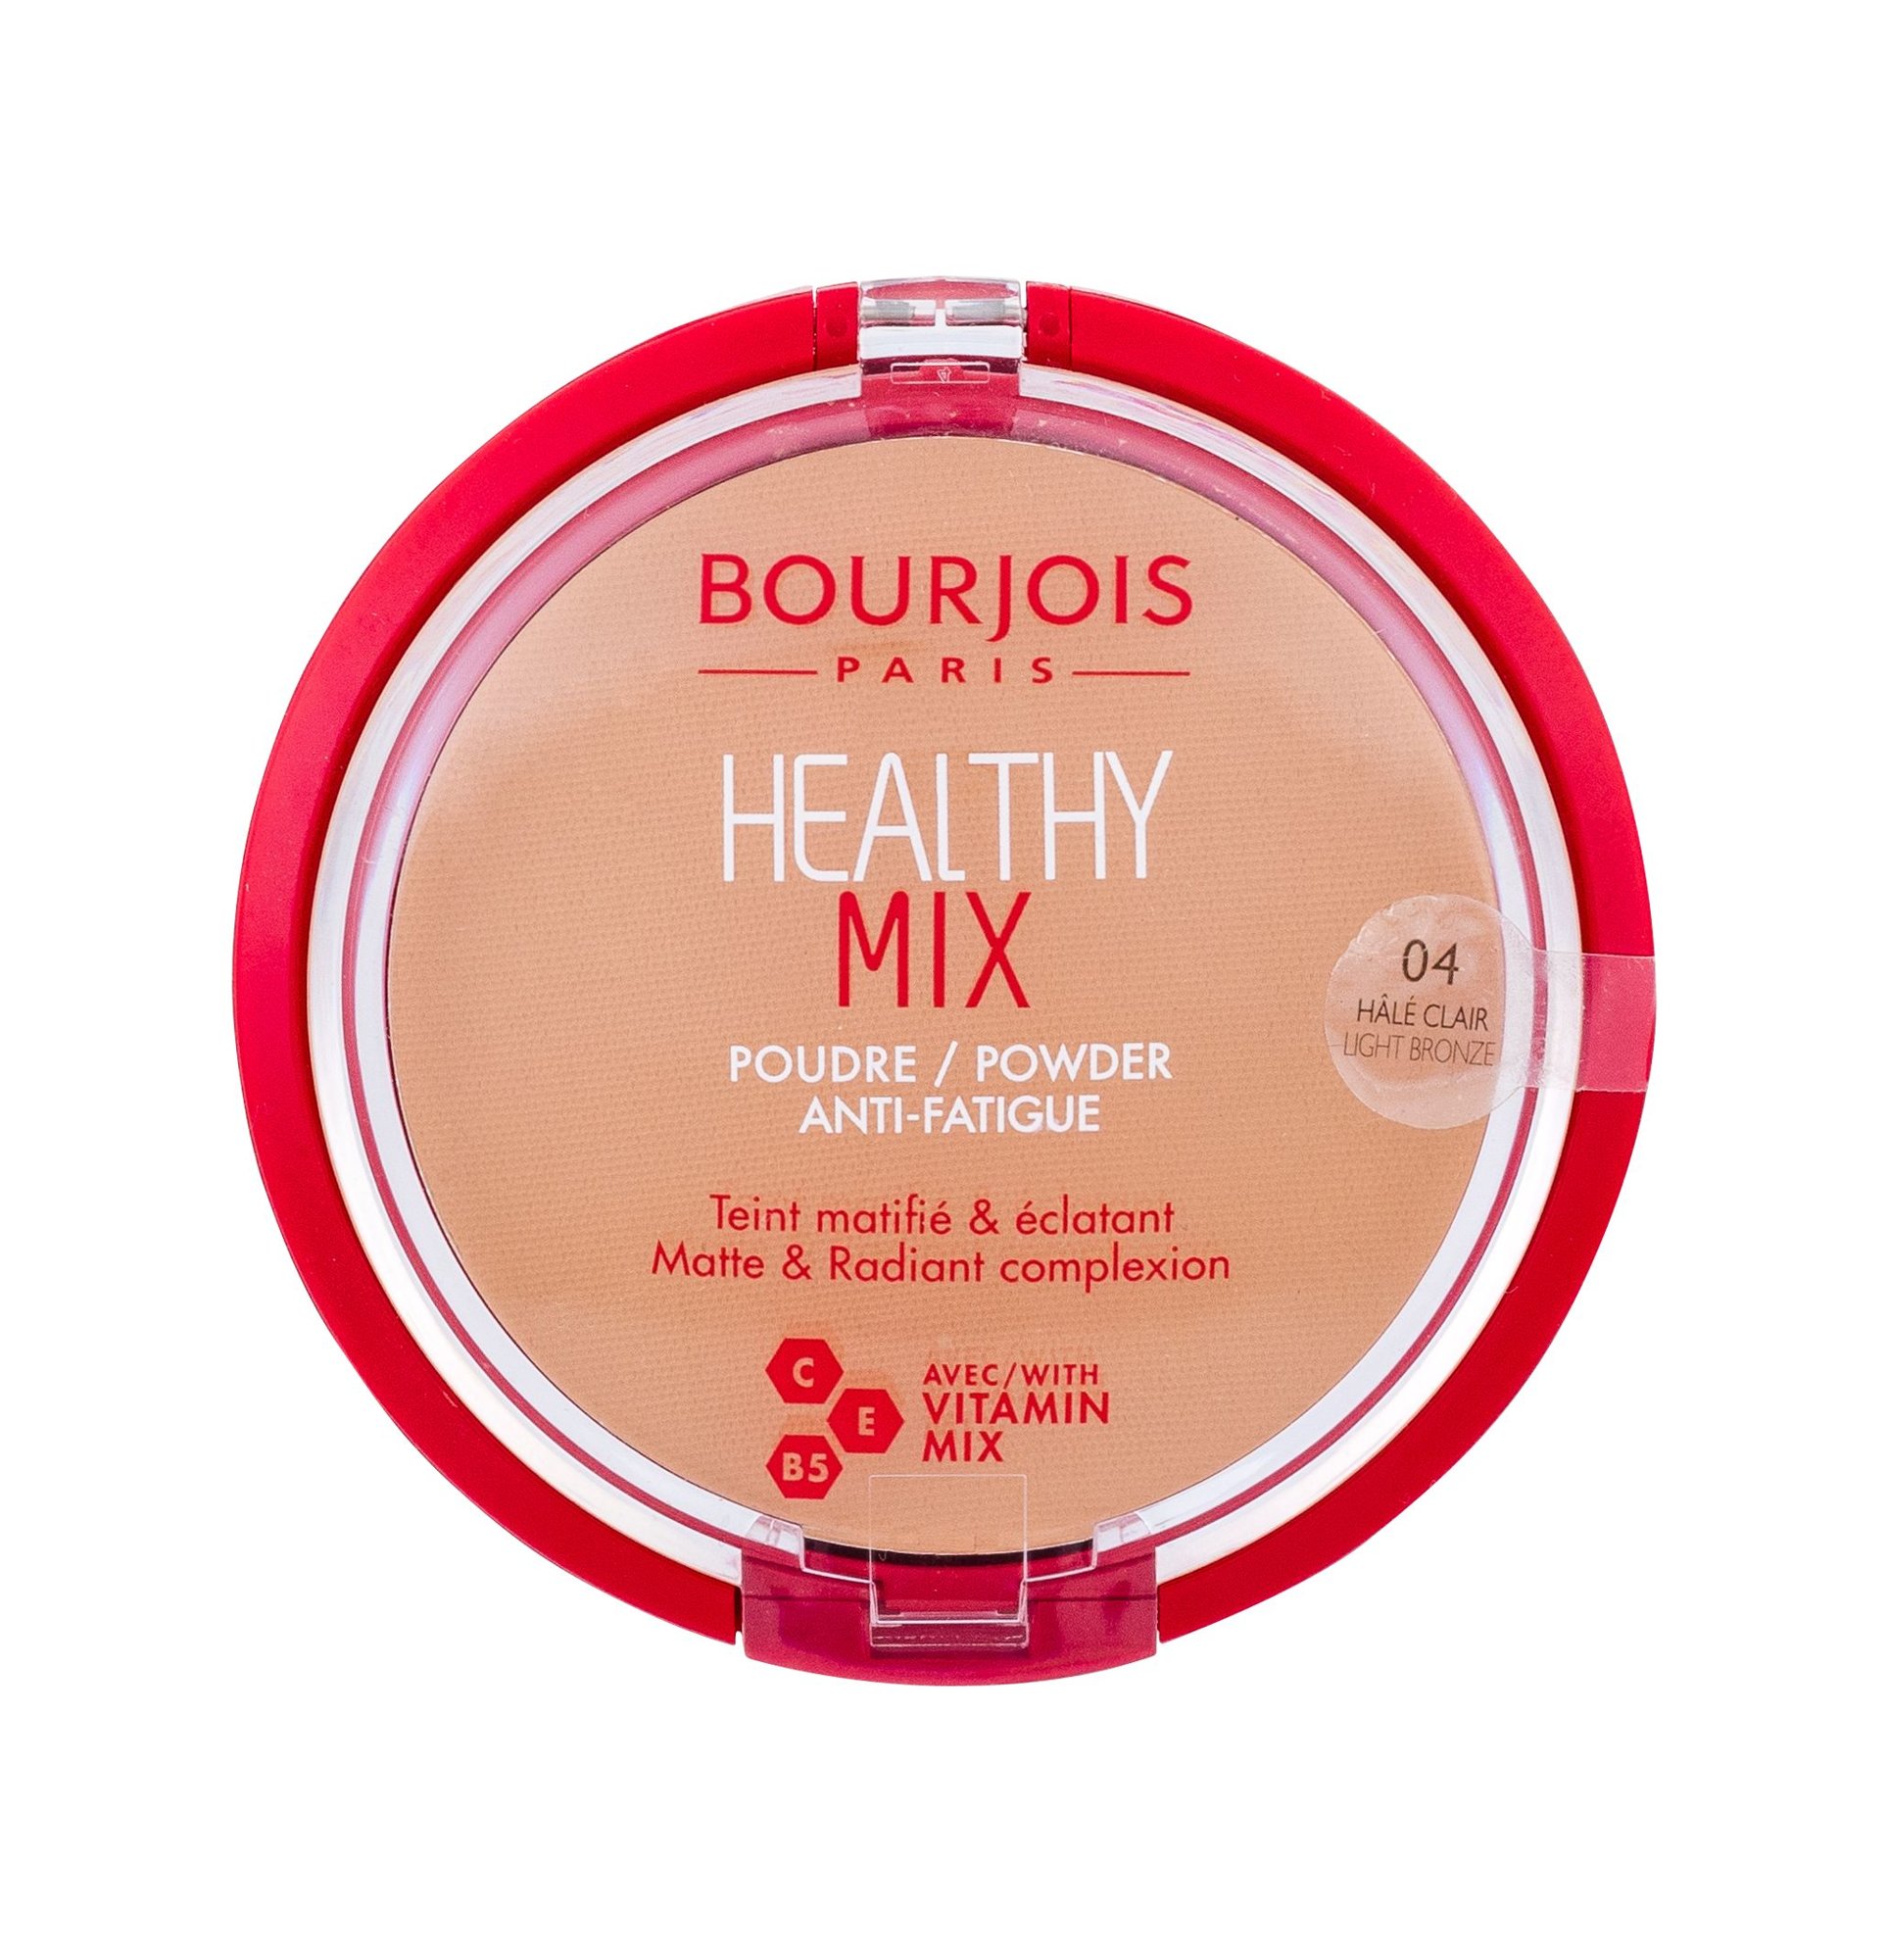 BOURJOIS Paris Healthy Mix Anti-Fatigue 11g sausa pudra